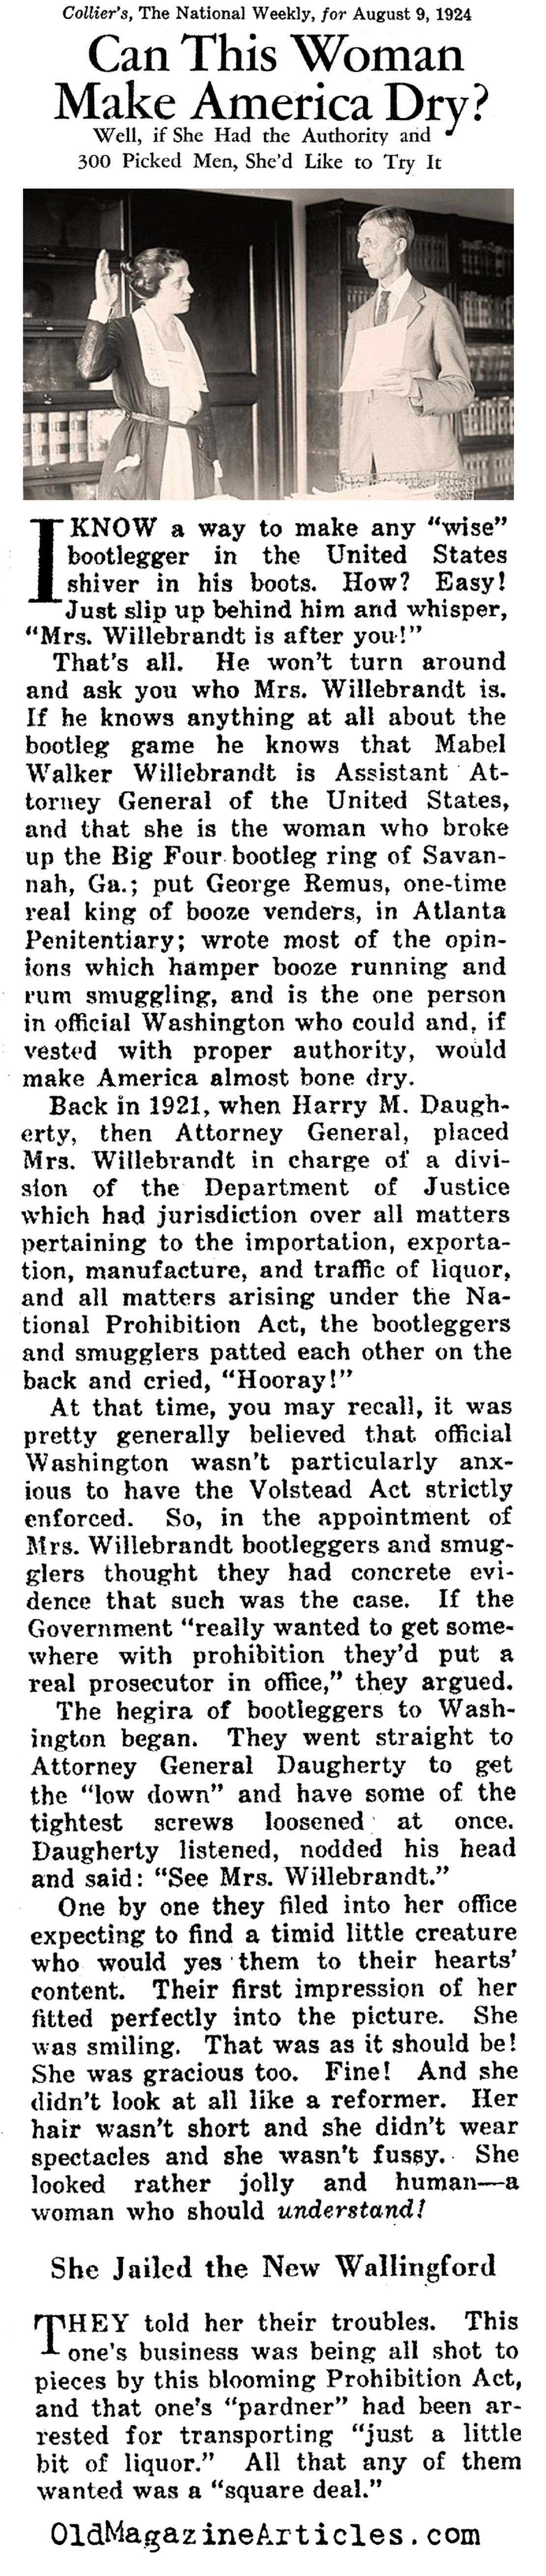 Mabel Walker Willebrandt Takes On Prohibition (Collier's Magazine, 1924)